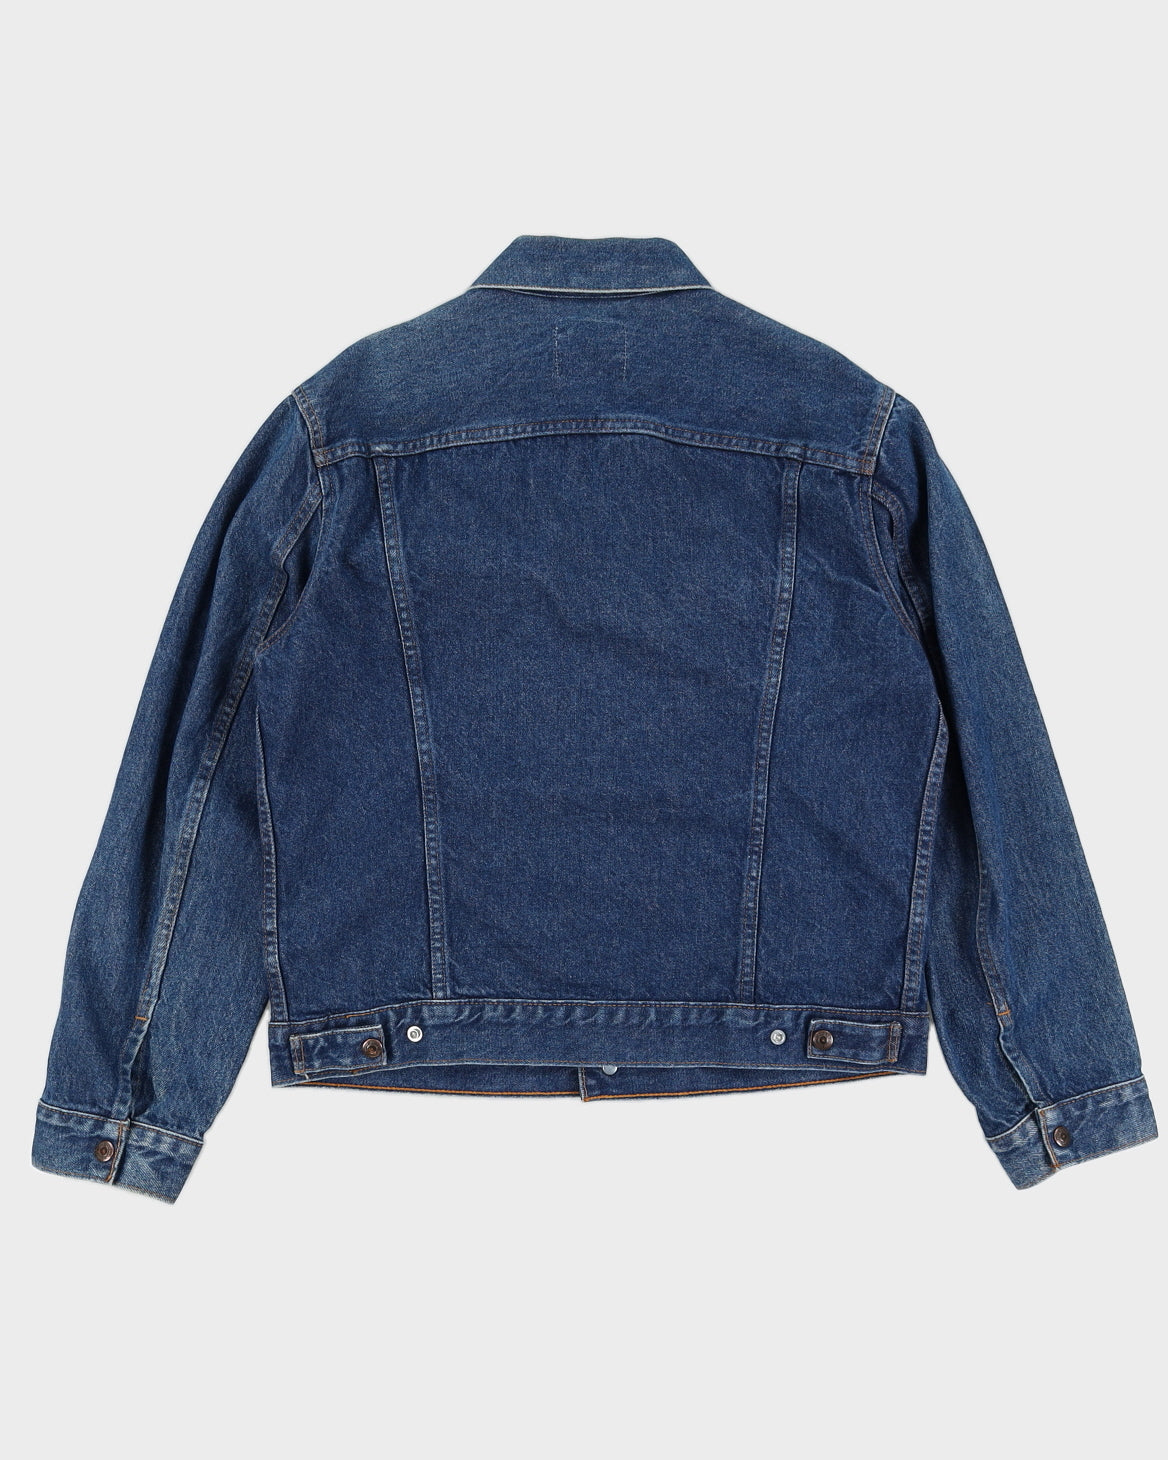 Vintage 90s GWG Medium Wash Blue Denim Jacket - M